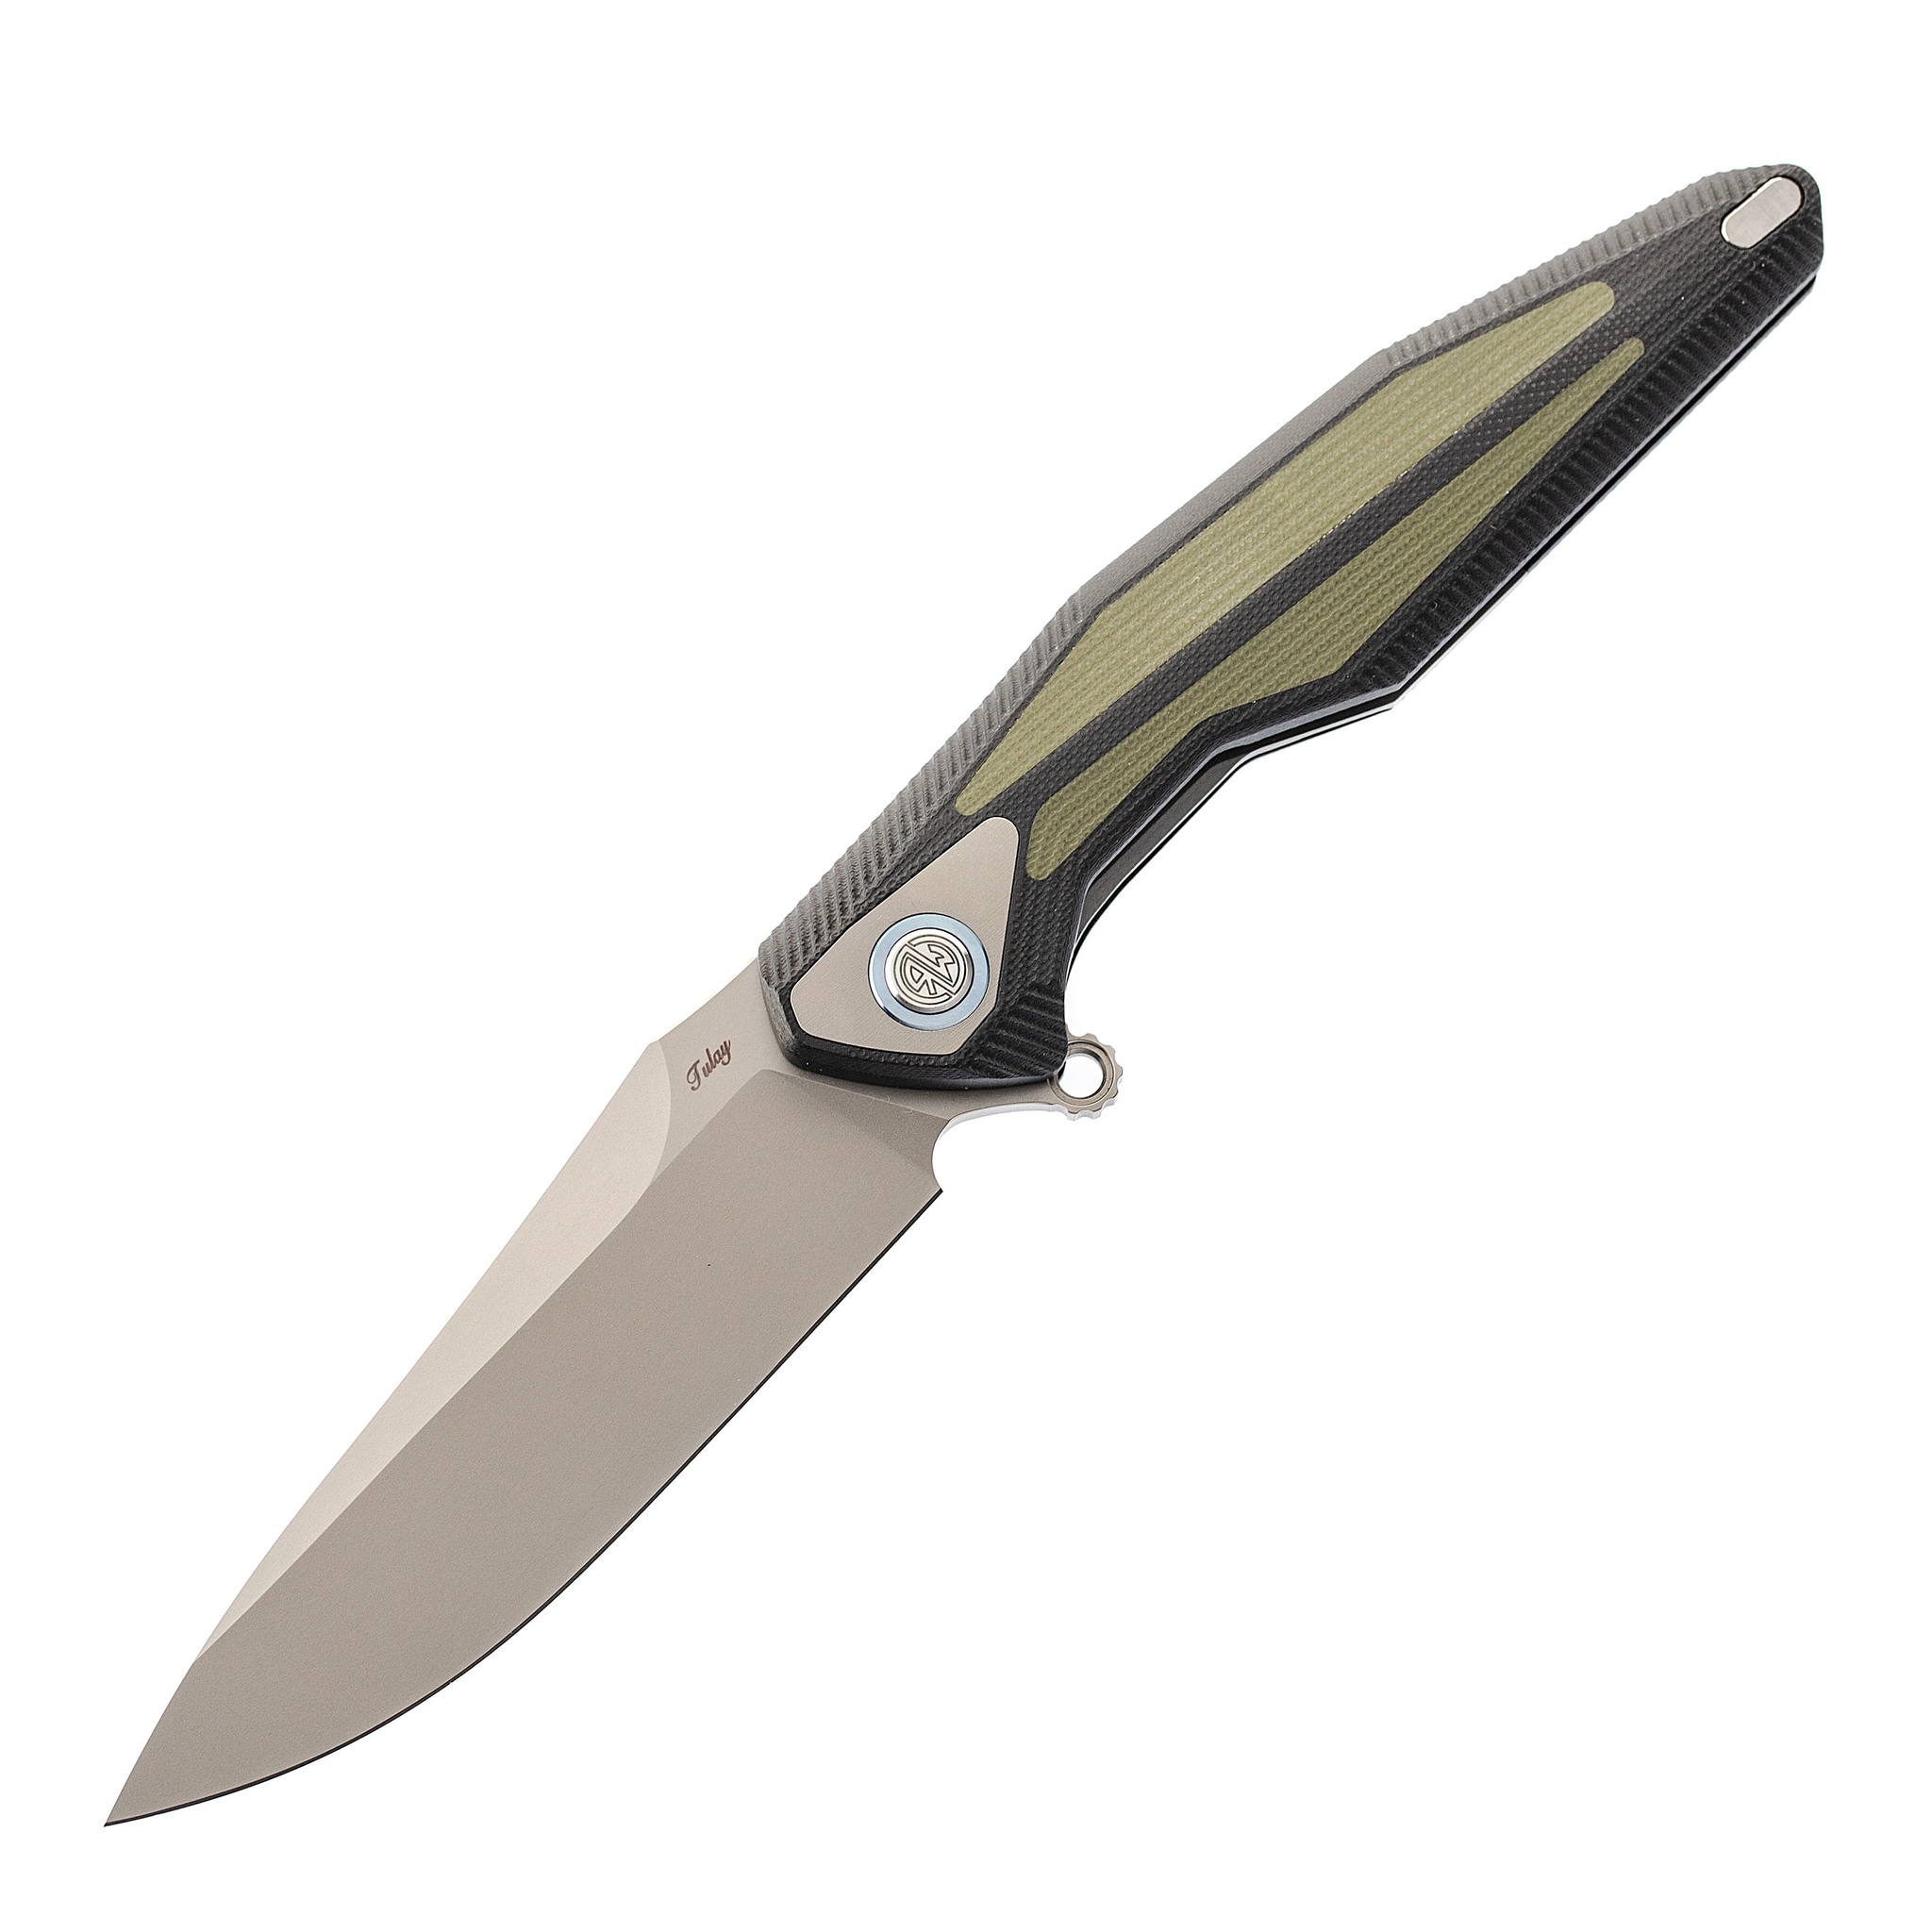   Tulay Rikeknife,  154CM, Green G10